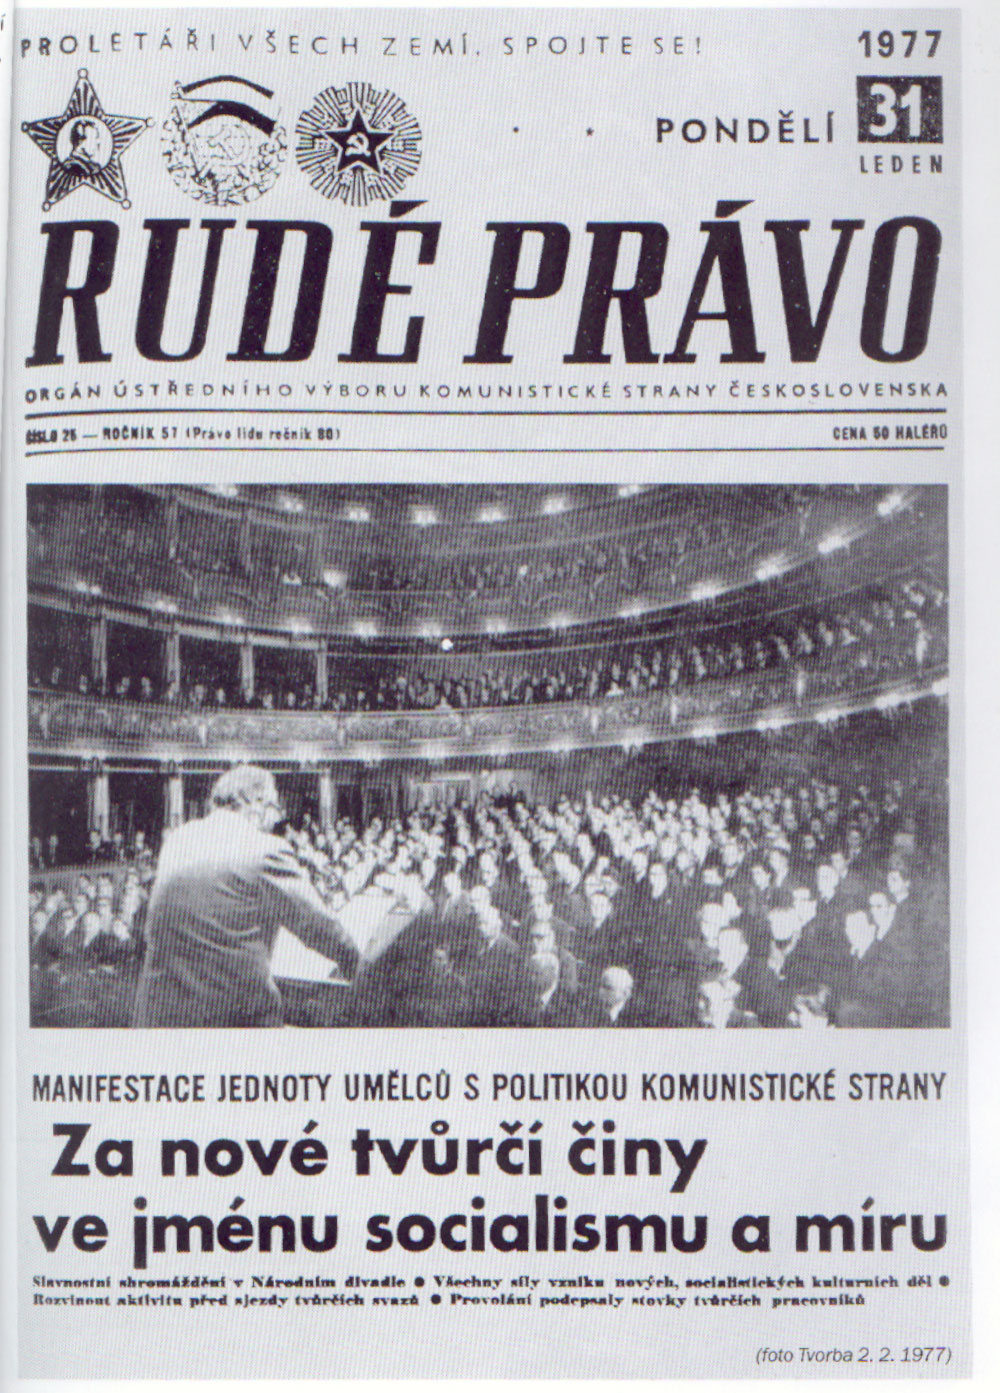 Prima pagina del Rudé Právo del 31 gennaio 1977 sull'eventi Anti-charta /  First page of Rudé Právo on January 31, 1977 on the Anti-Charter event